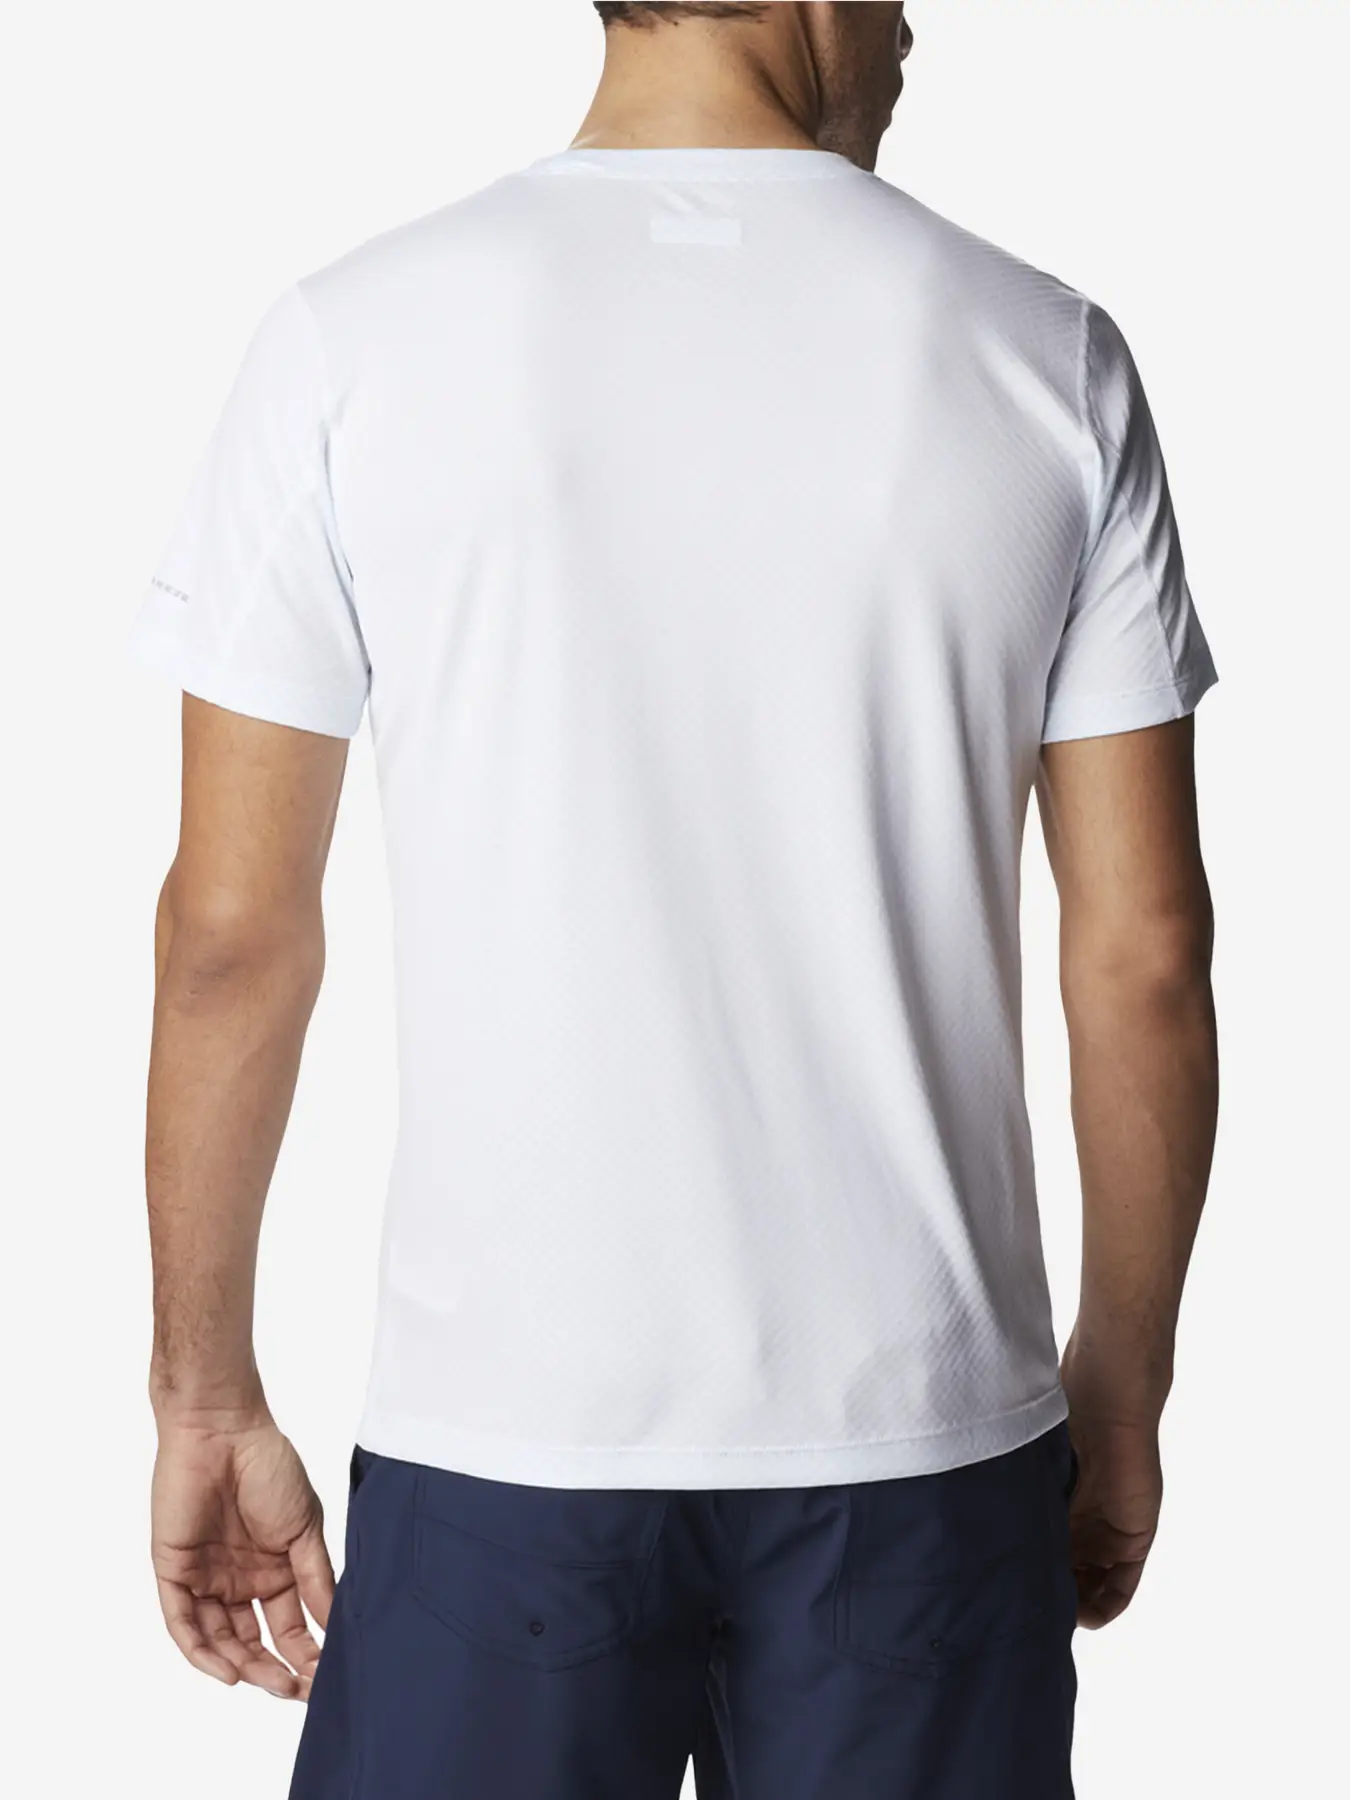 Футболка  Columbia Zero Rules™ Short Sleeve Shirt (1533313-100) - фото